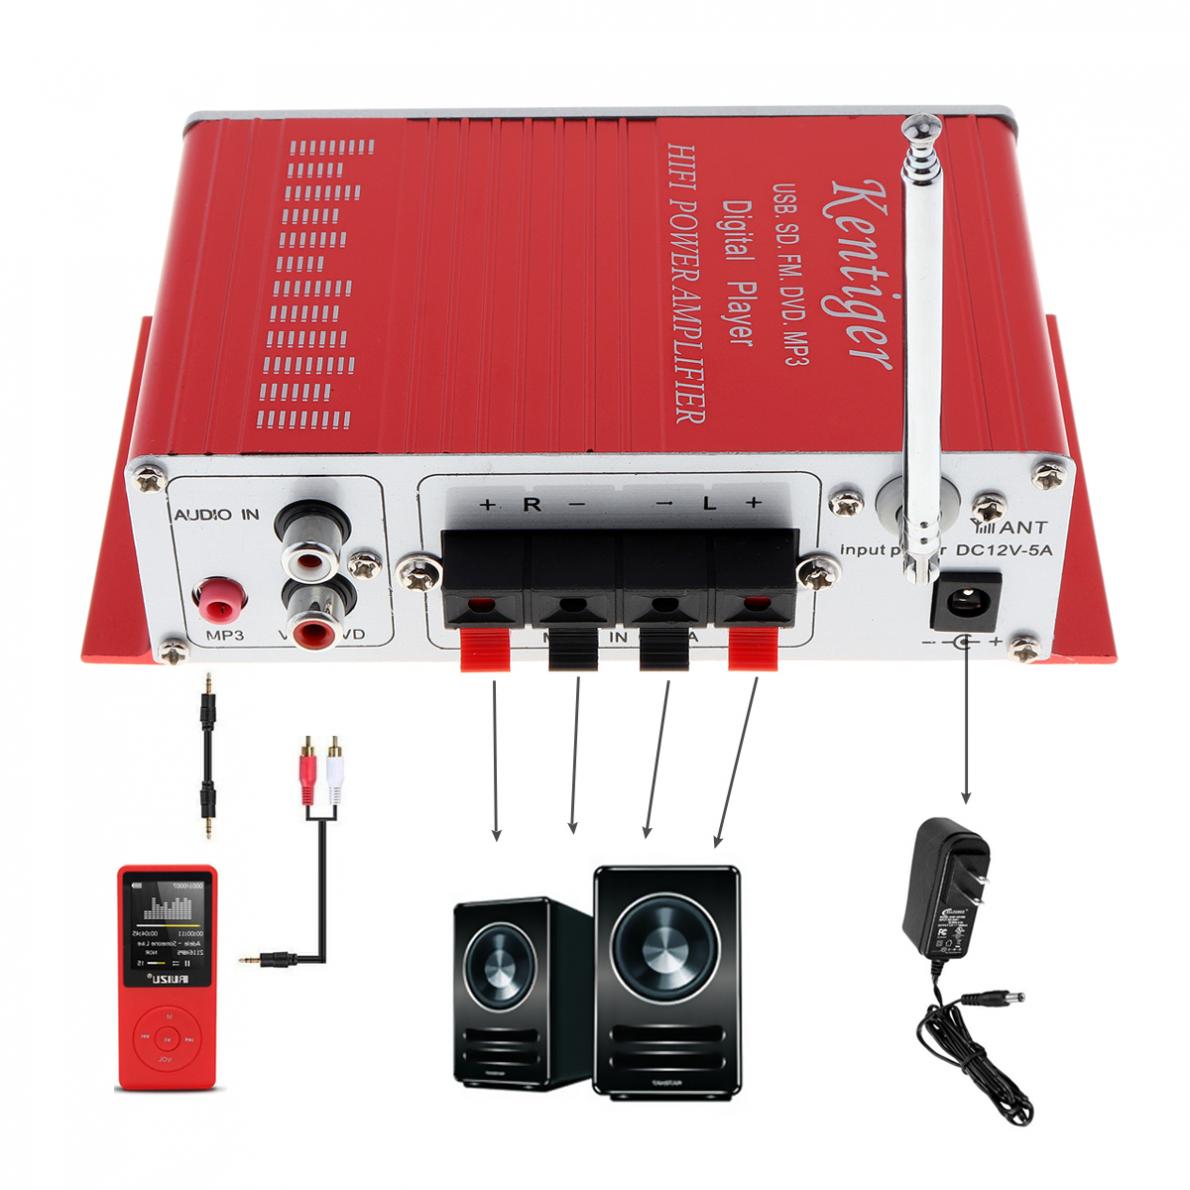 Kentiger HY-502 2CH HI-FI Digital Audio Player Car Amplifier FM Radio Stereo Player Support SD / USB / MP3 / DVD Input